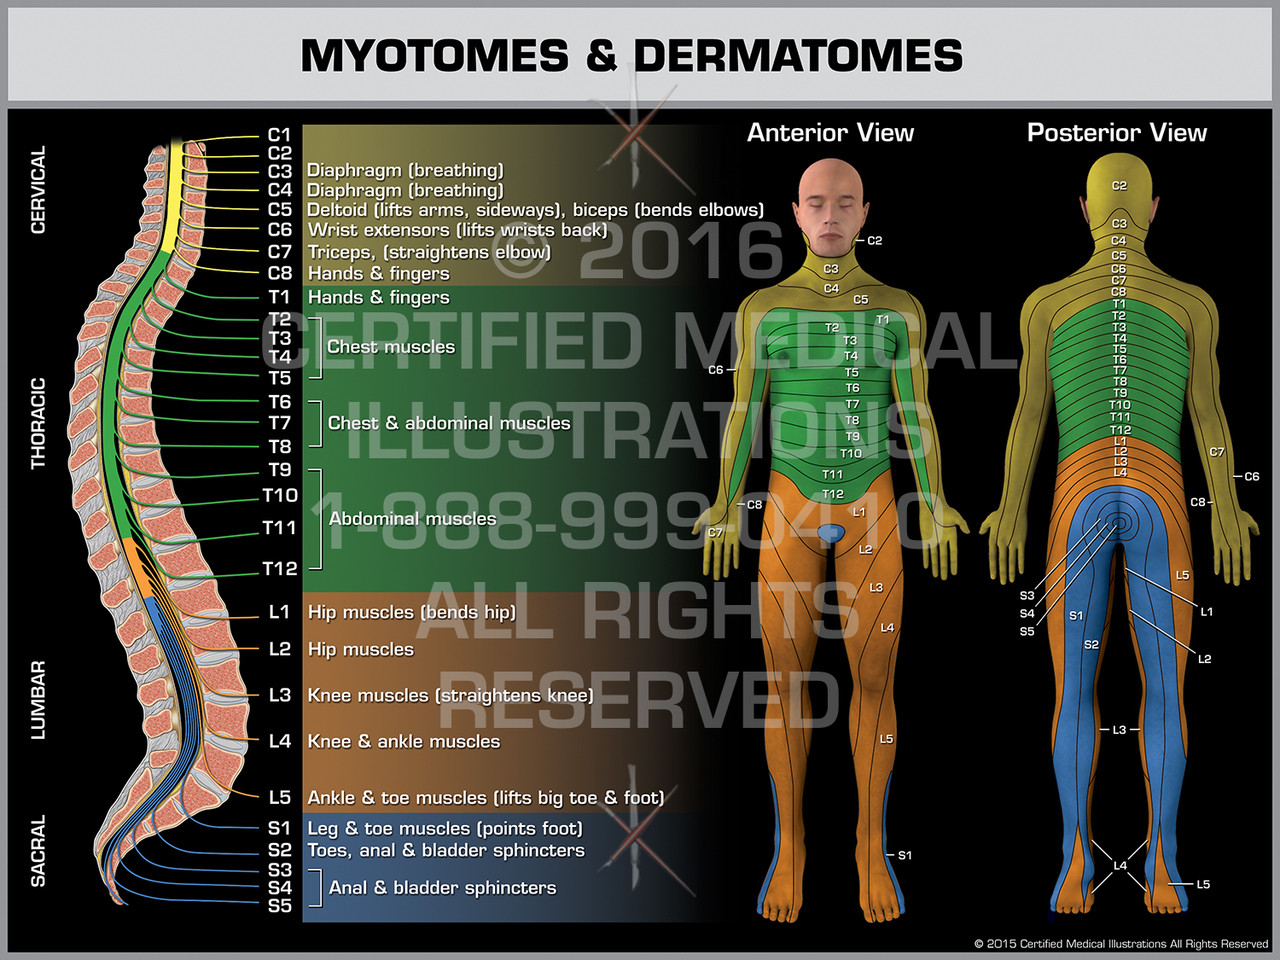 Printable Dermatome Chart